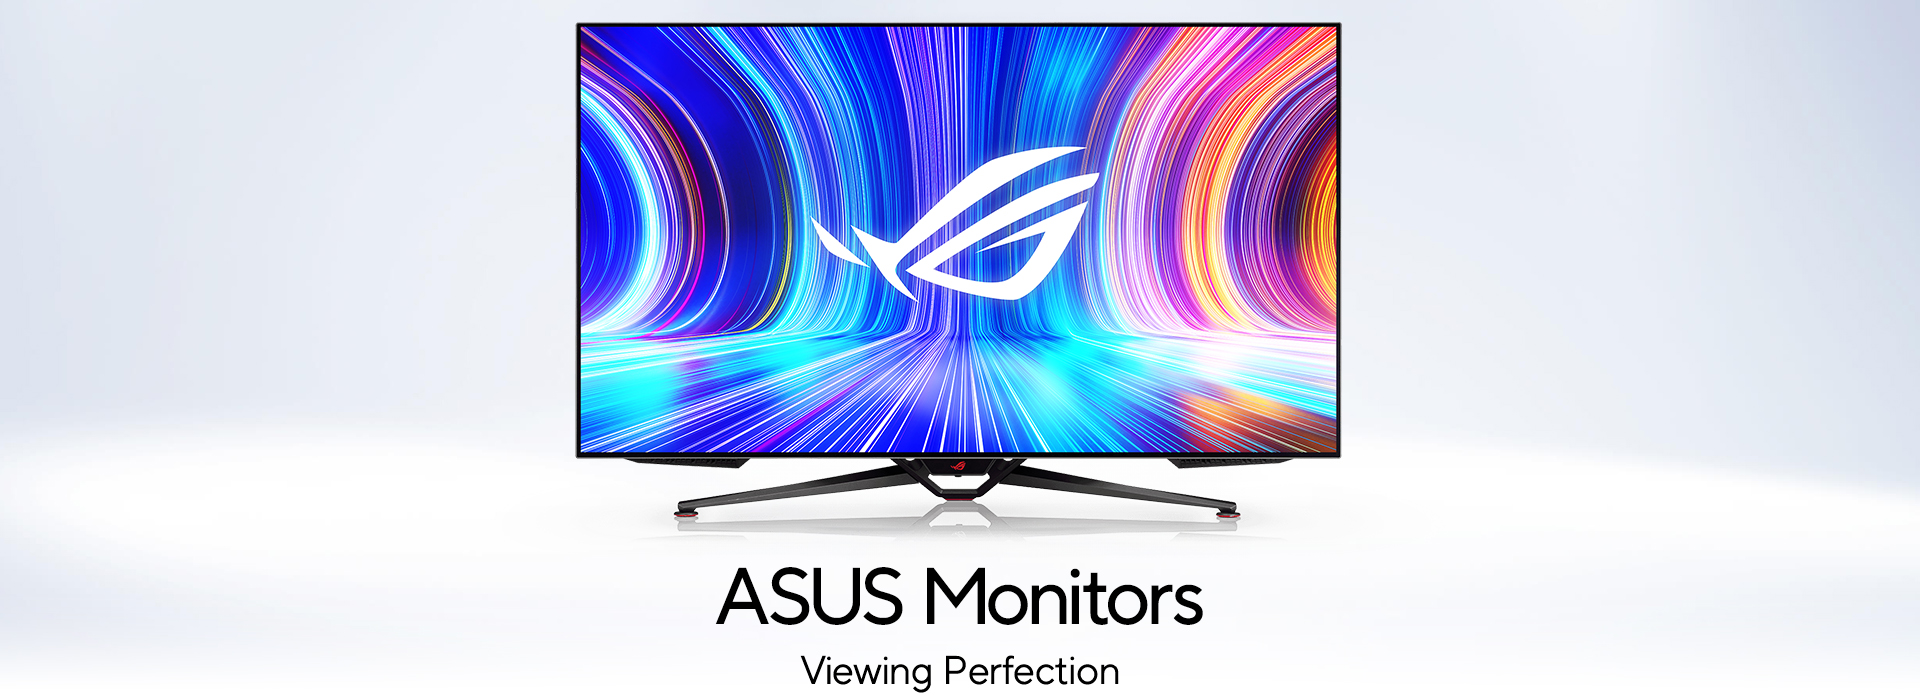 ASUS Monitors Refresh 03.21.banner